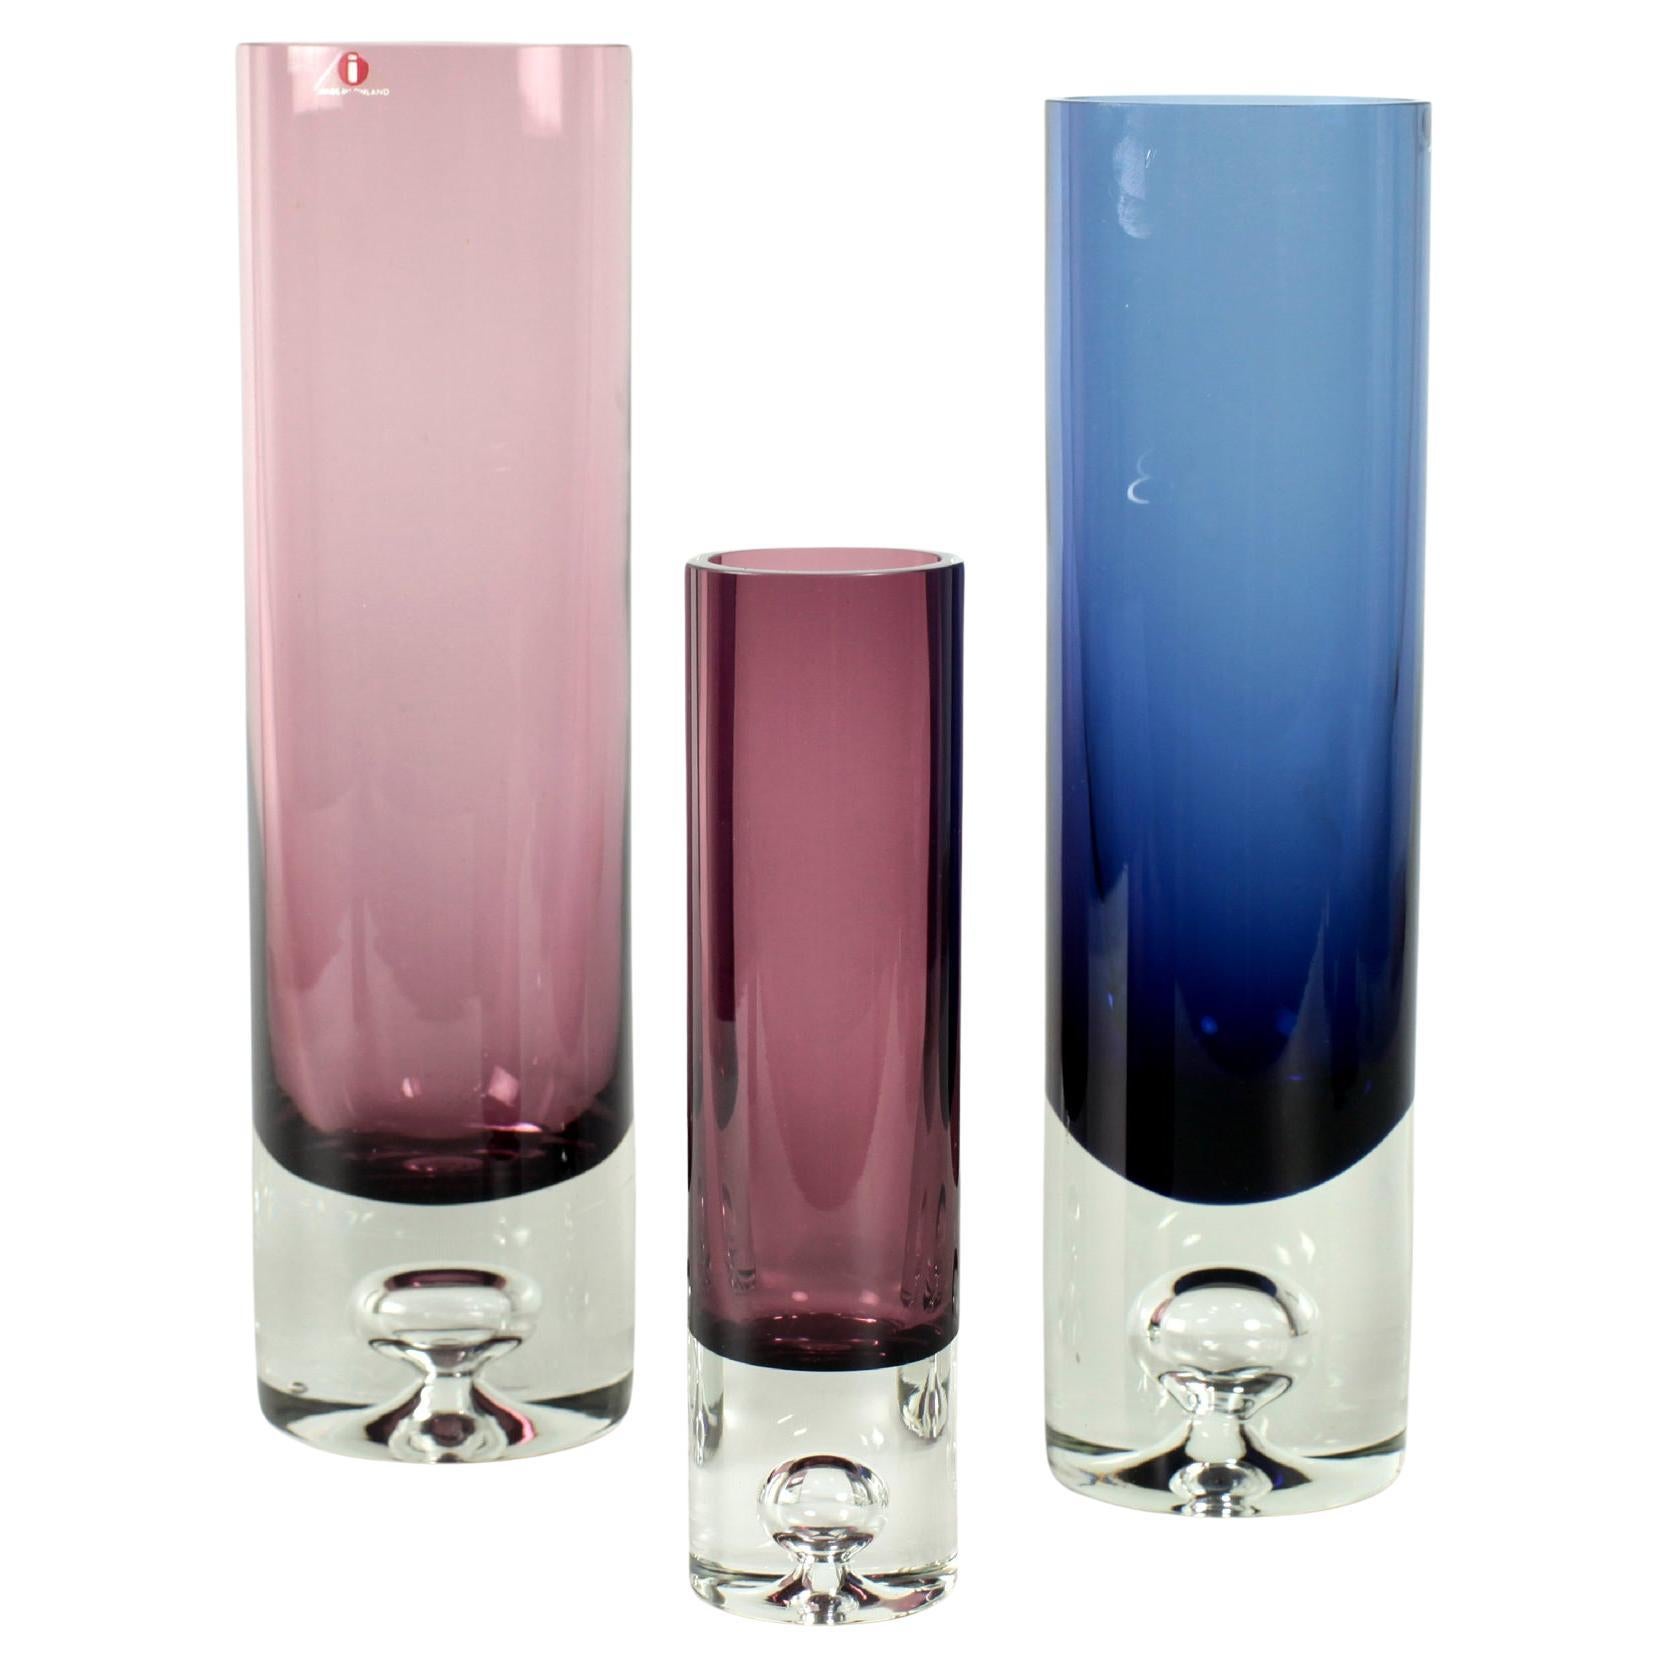 Tapio Wirkkala for Iittala Finland Set of 3 Colored Glass Vases For Sale